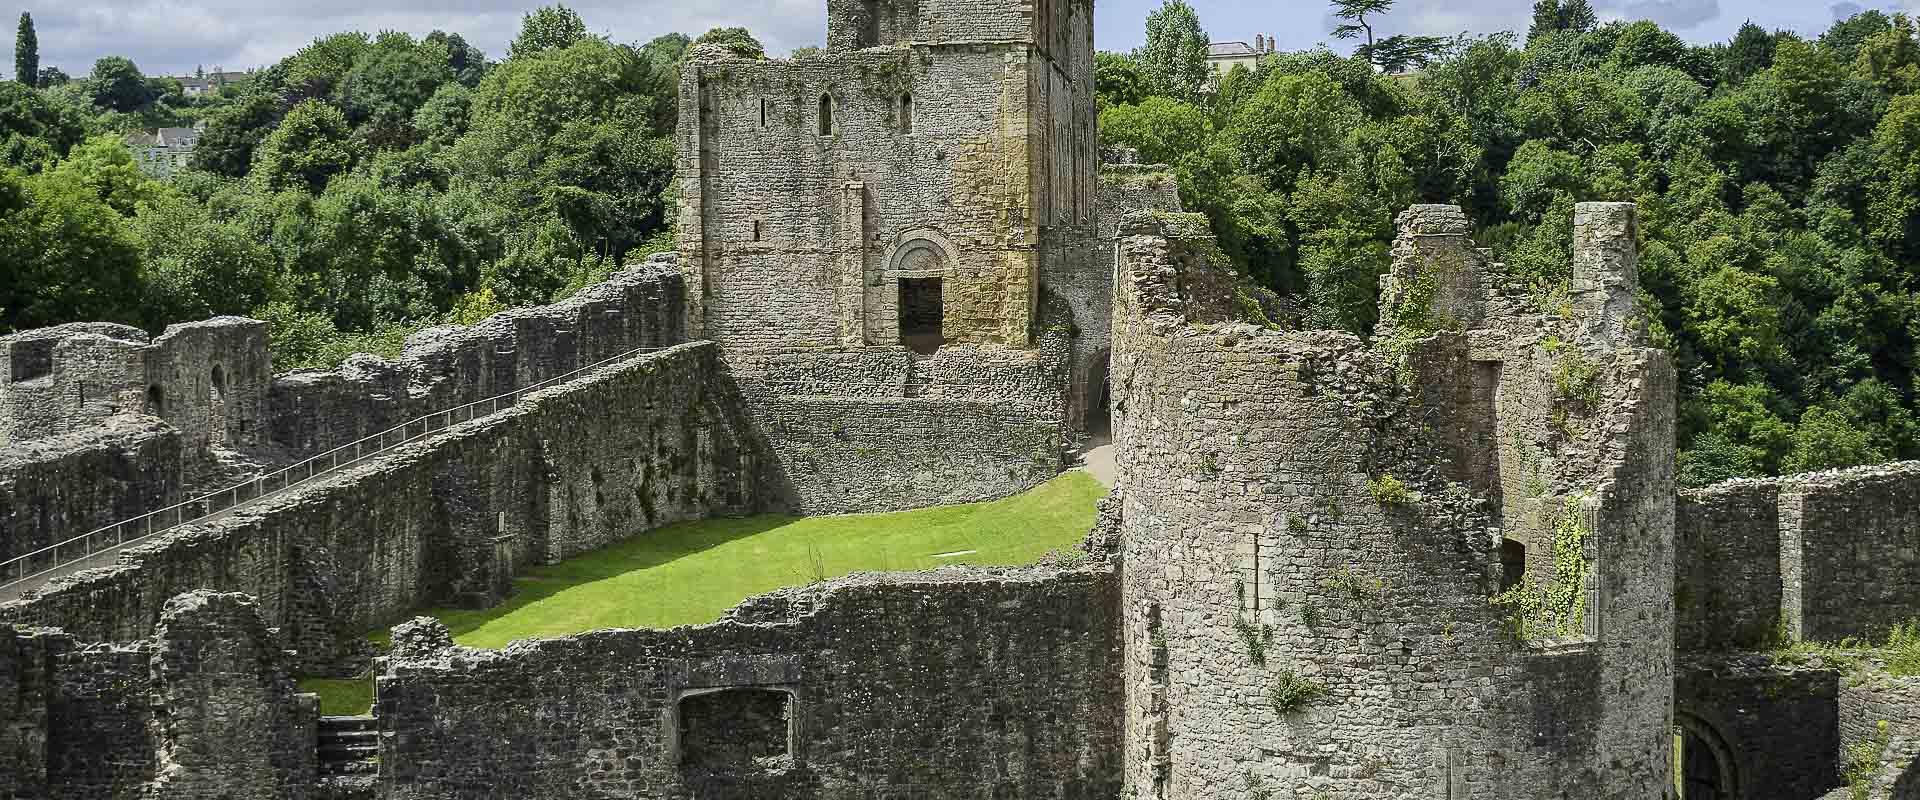 Castell Cas-Gwent/Chepstow Castle